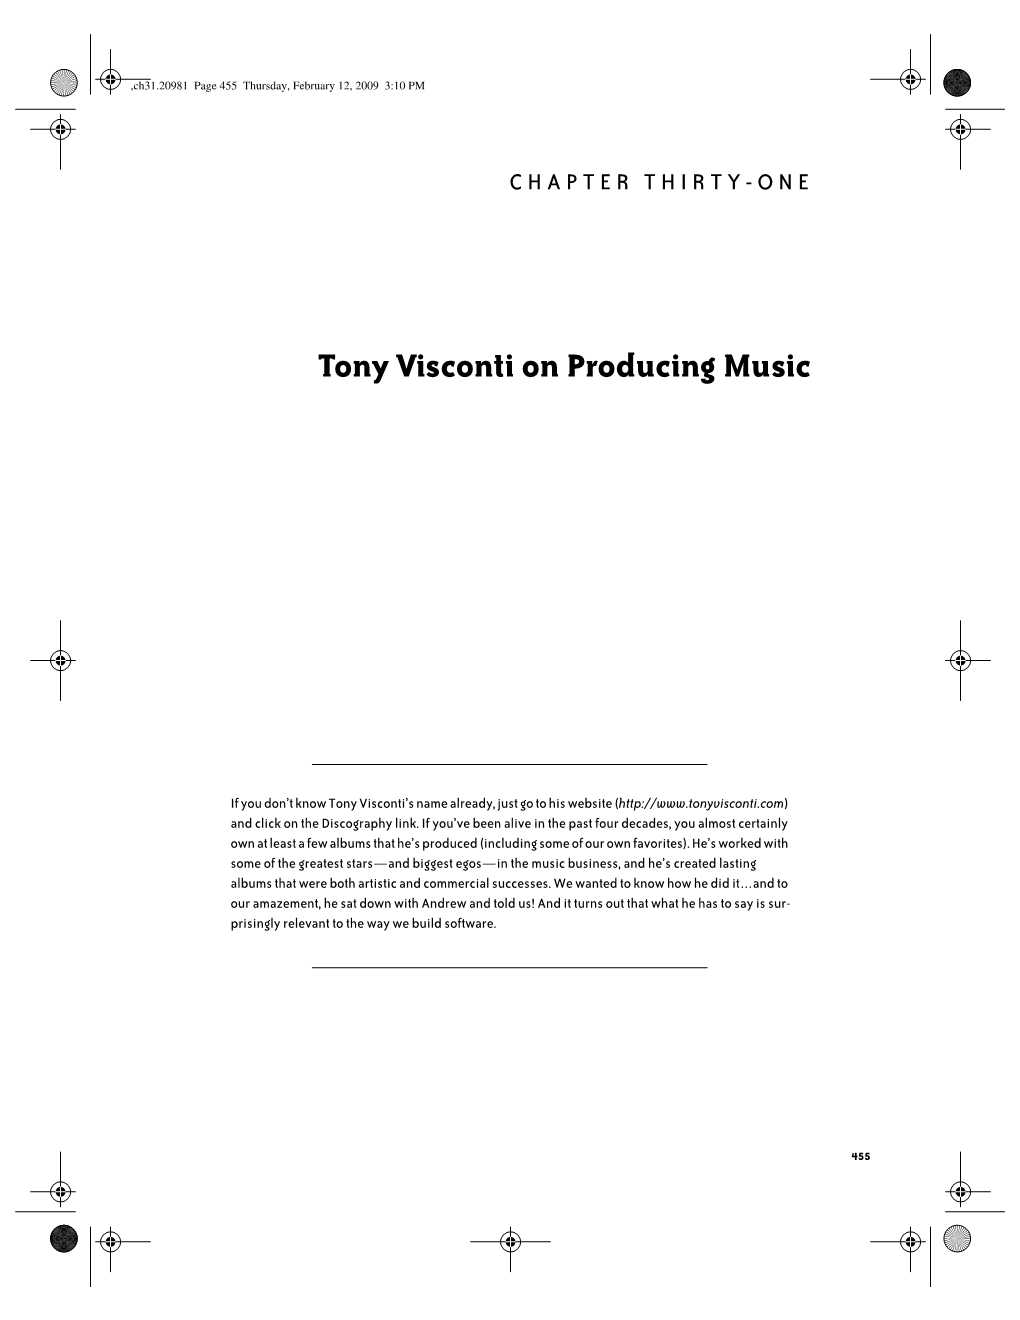 Tony Visconti on Producing Music